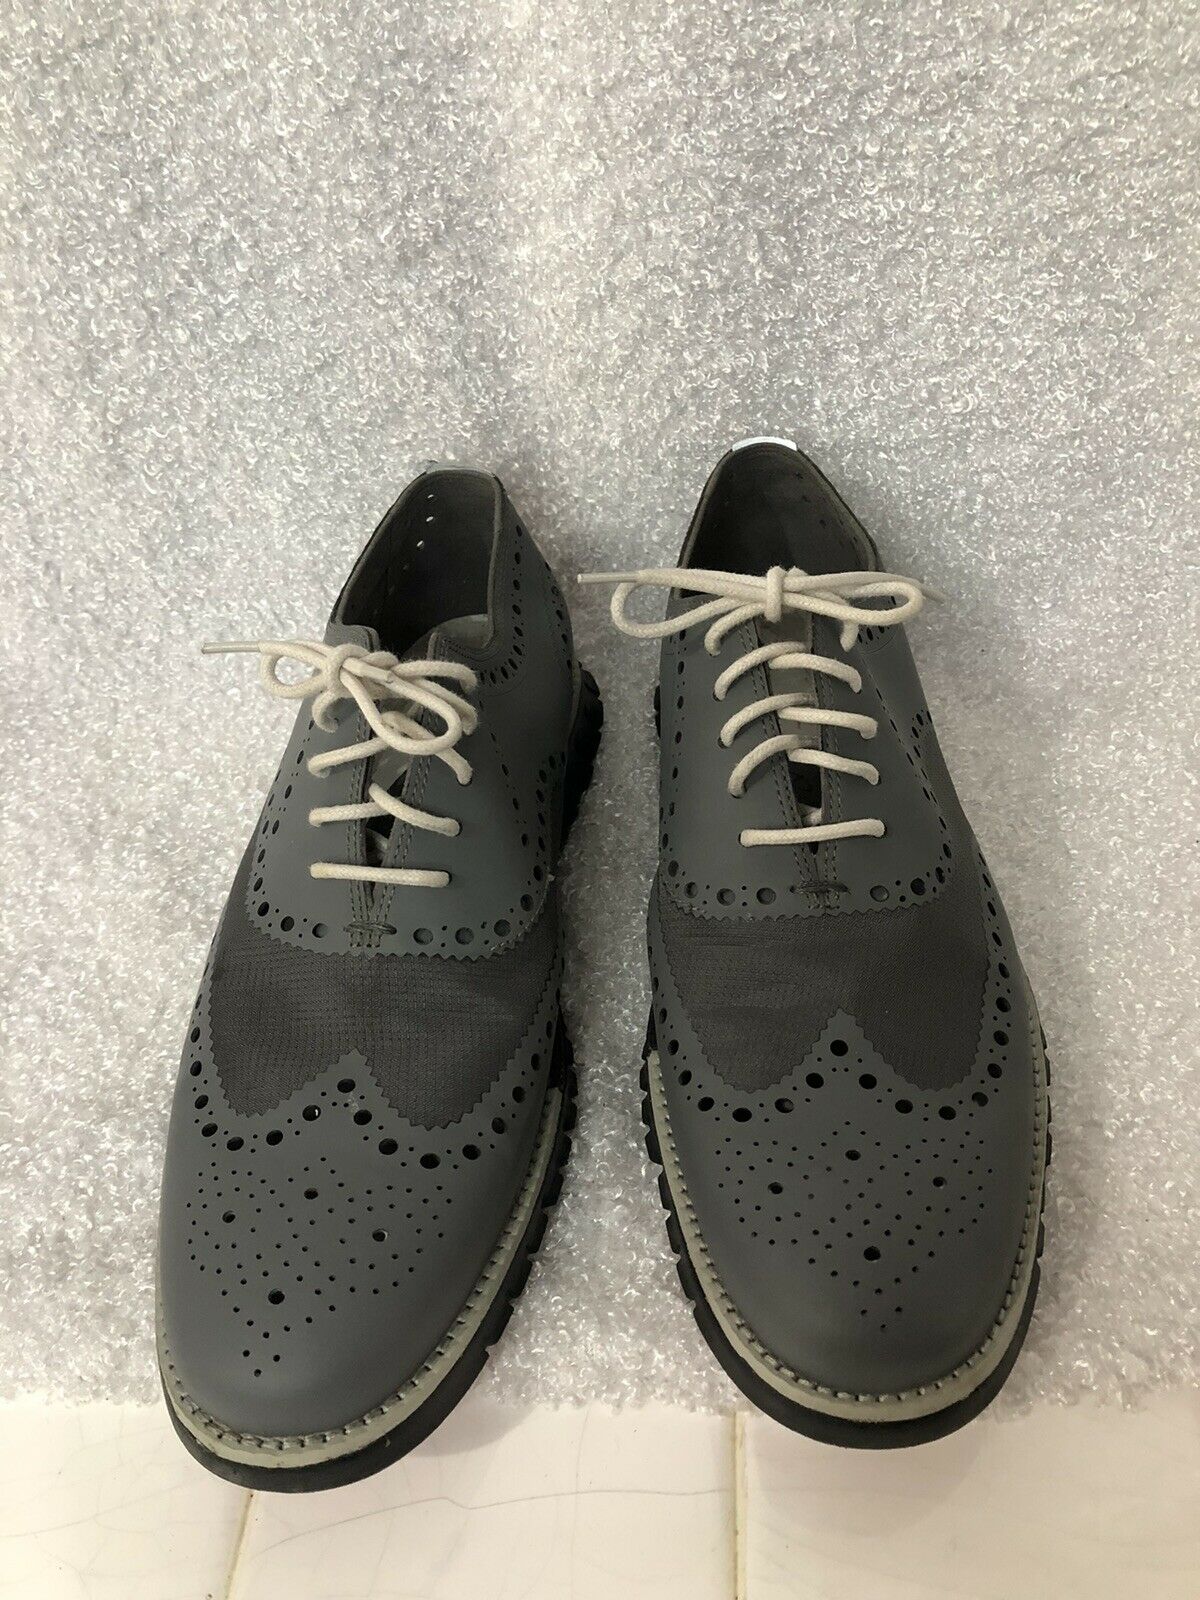 Cole Haan ZeroGrand C14319 Sneaker Dress Shoes Men's Sz 9.5 Oxford No Inserts